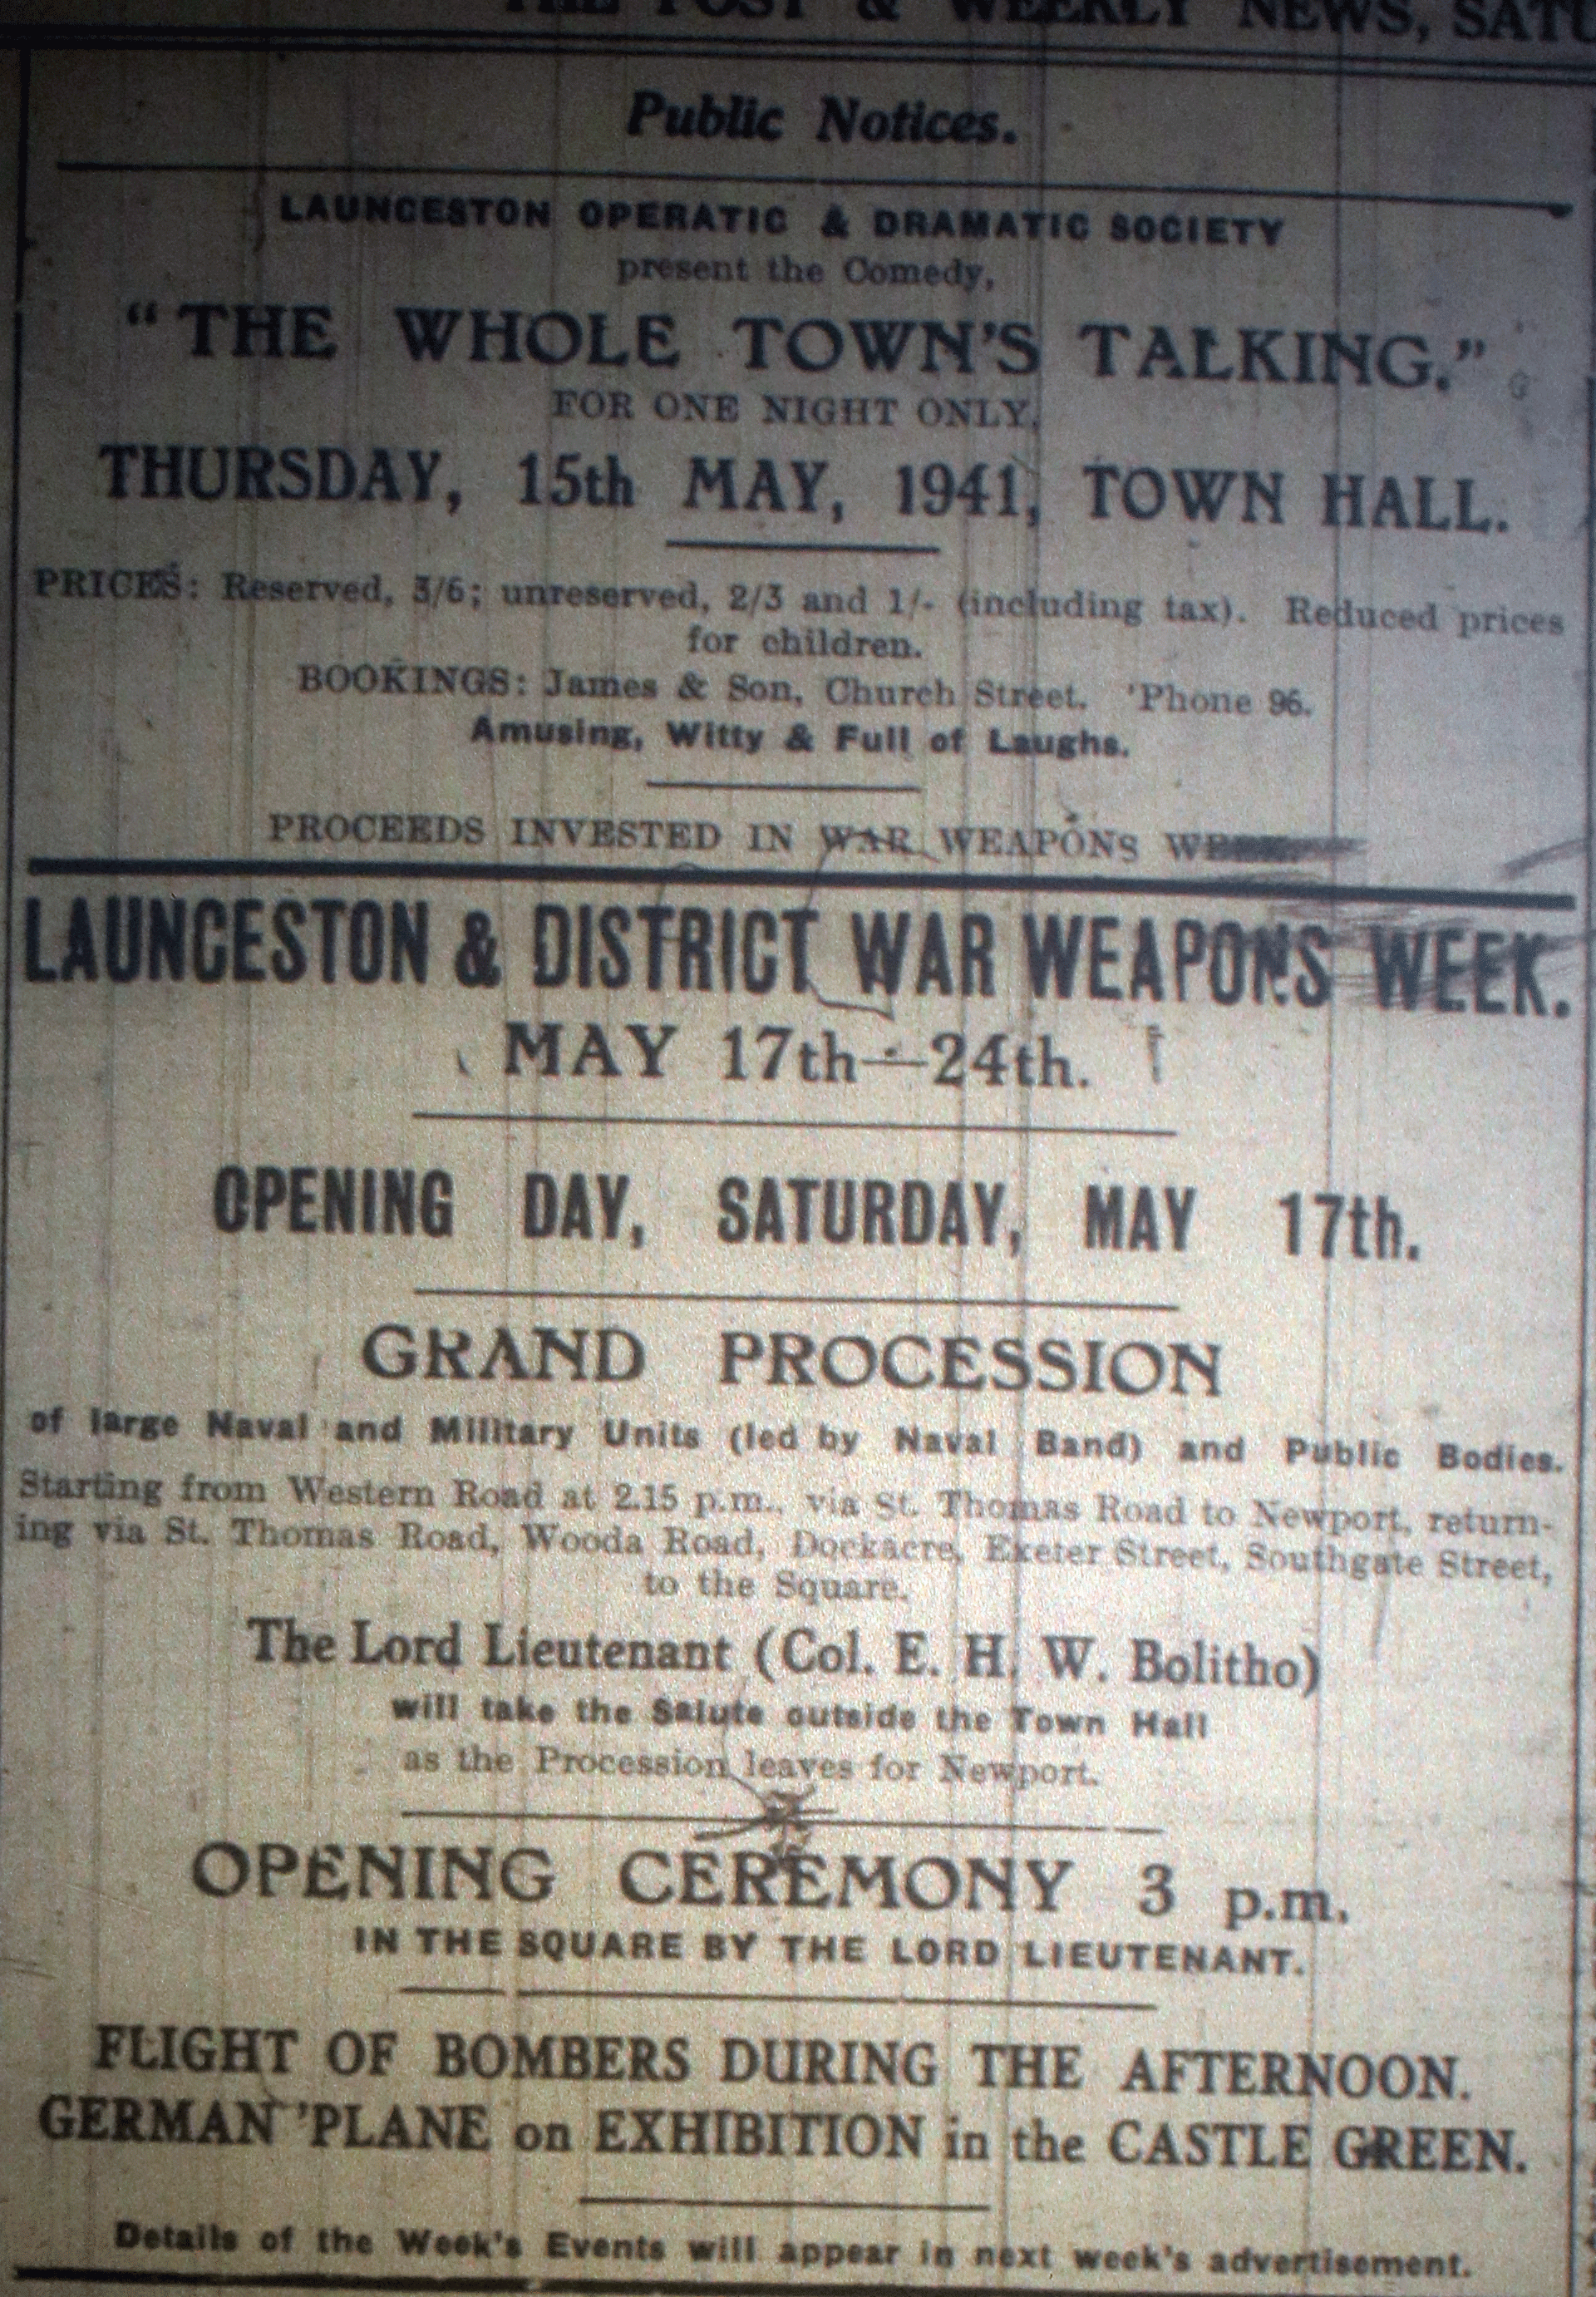 Launceston War Weapons Week Notice April, 1941.